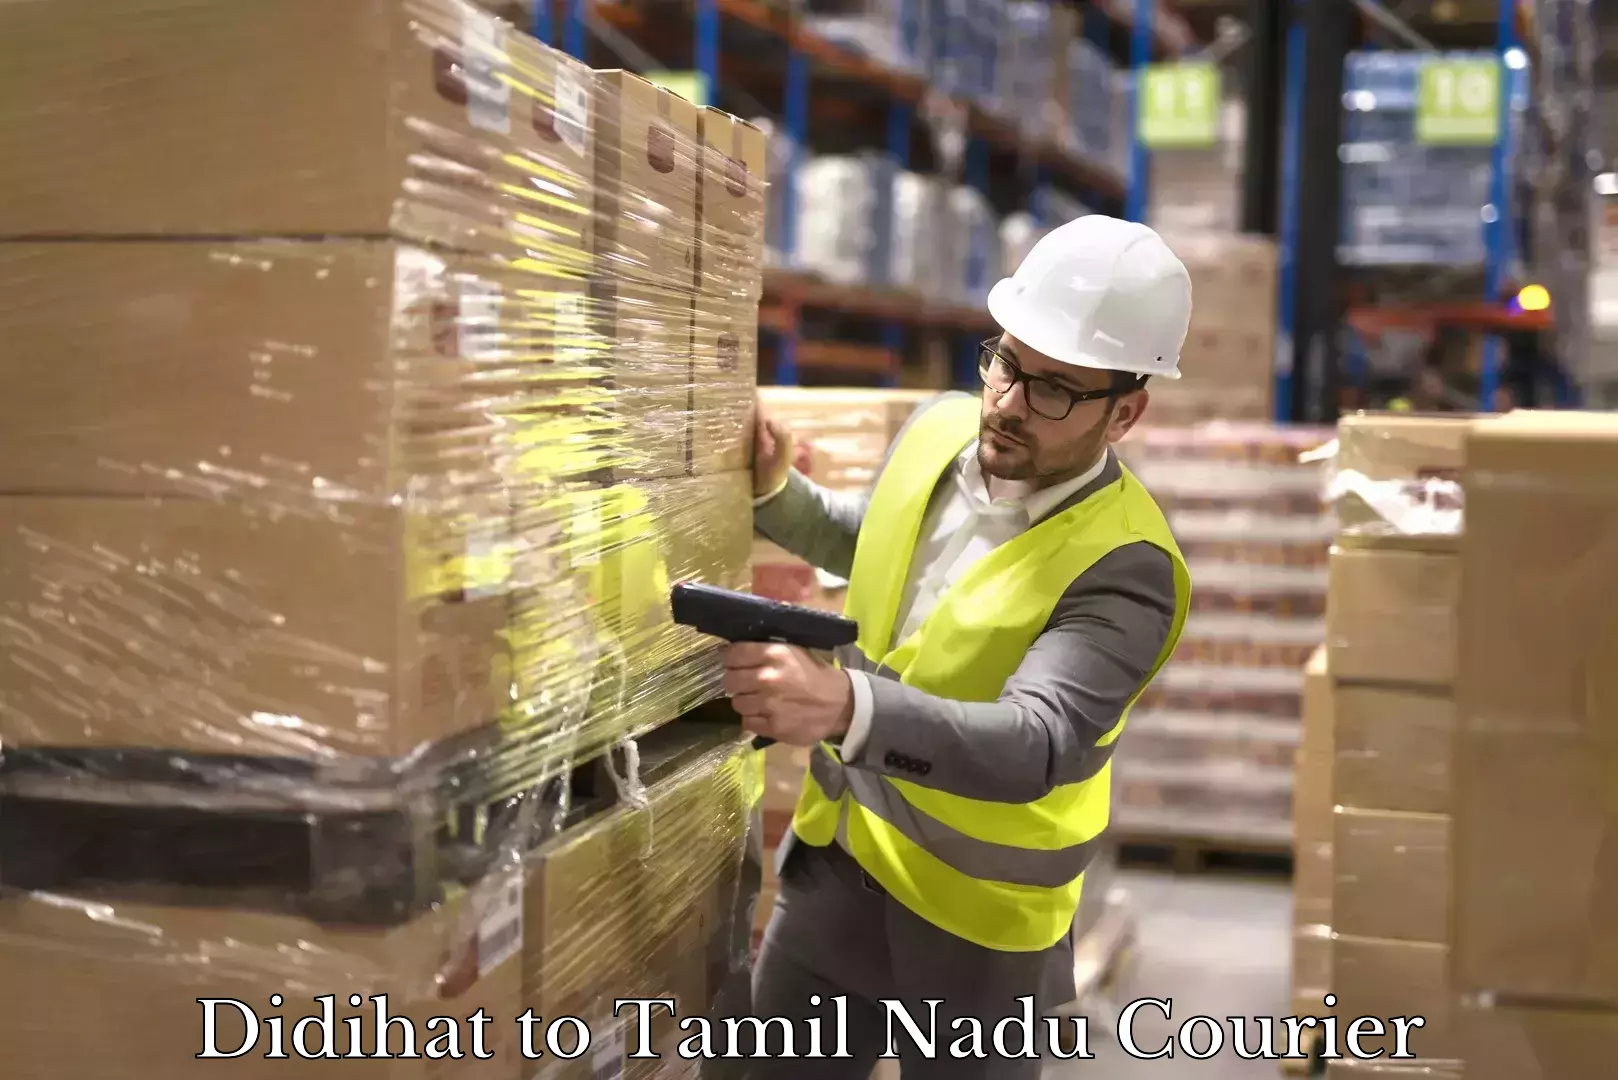 Delivery service partnership Didihat to Tamil Nadu